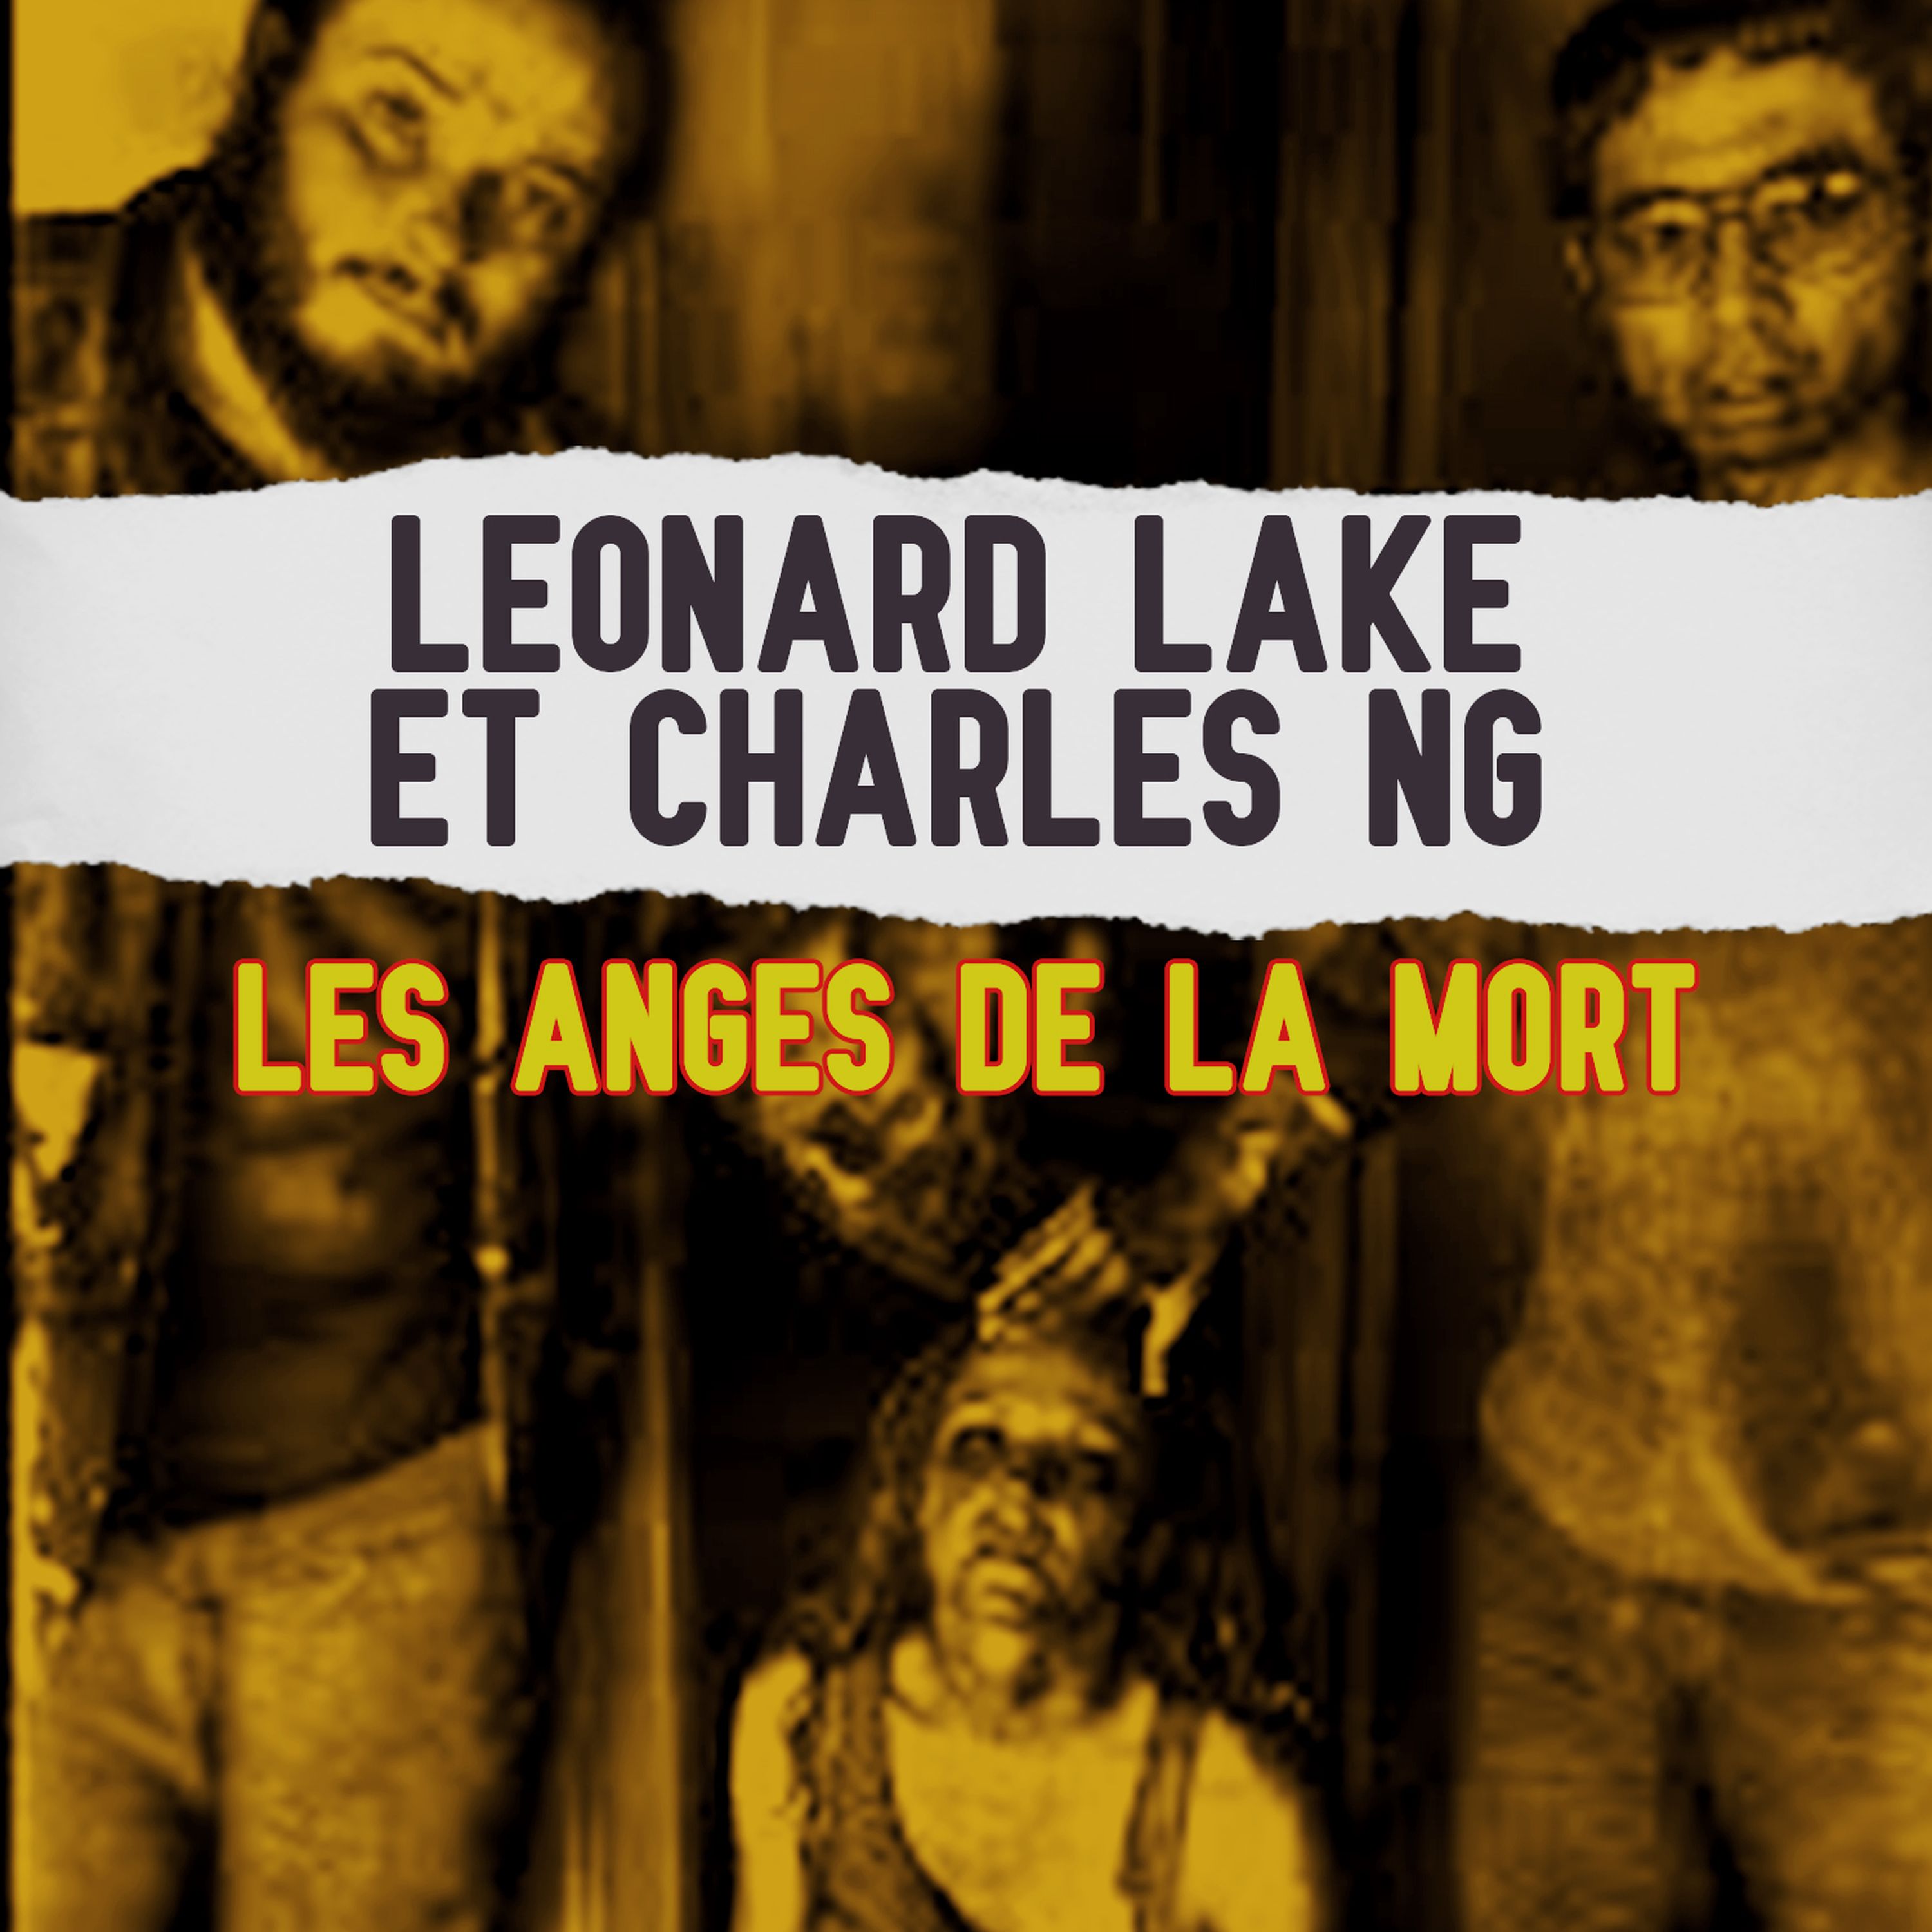 Leonard Lake et Charles Ng, les anges de la mort !